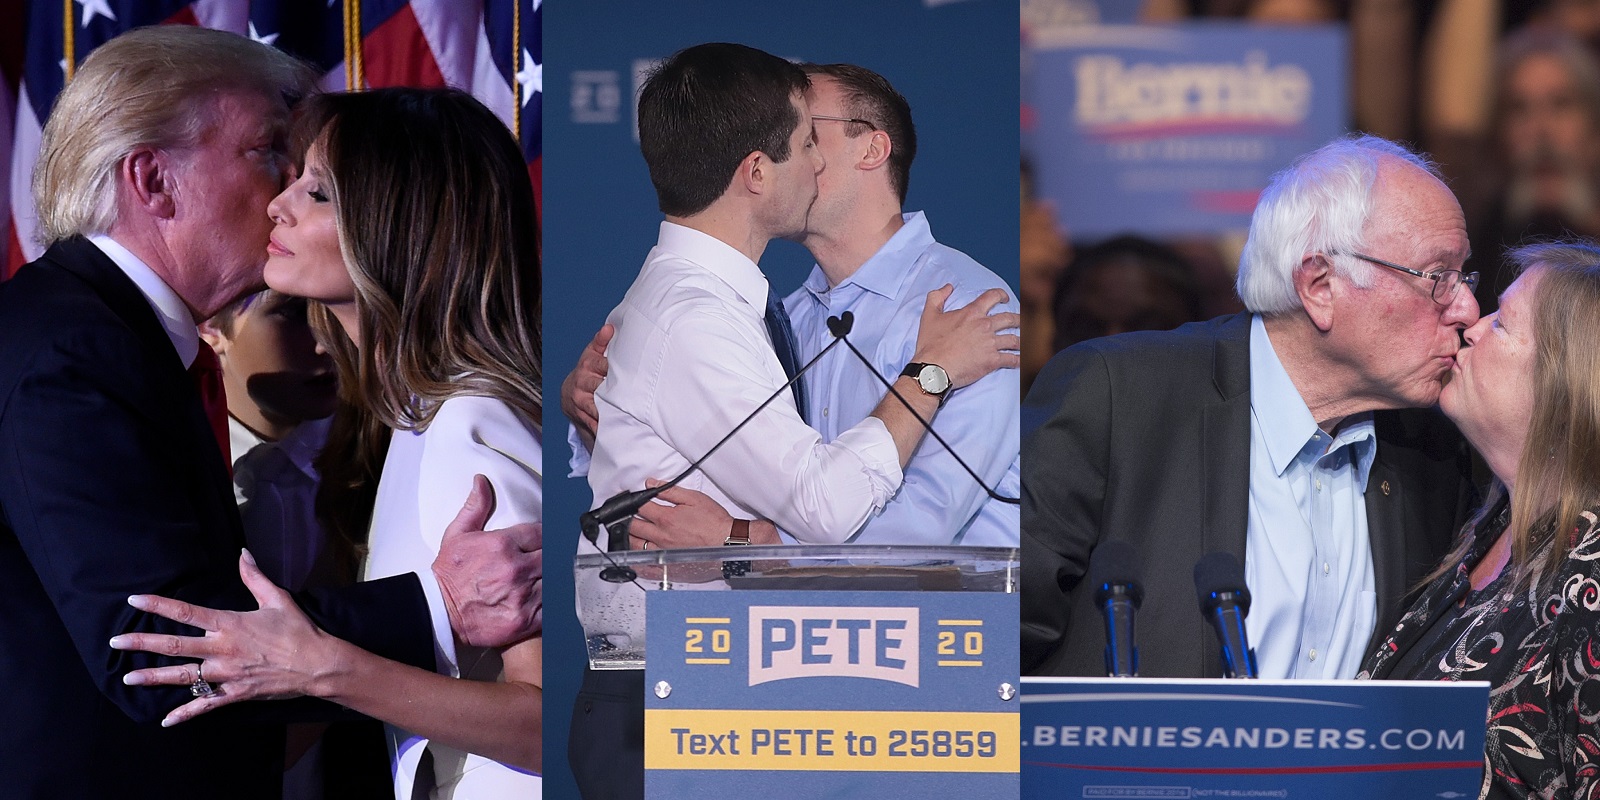 Republican pundit: Pete Buttigieg 'made gayness an issue' by kissing husband